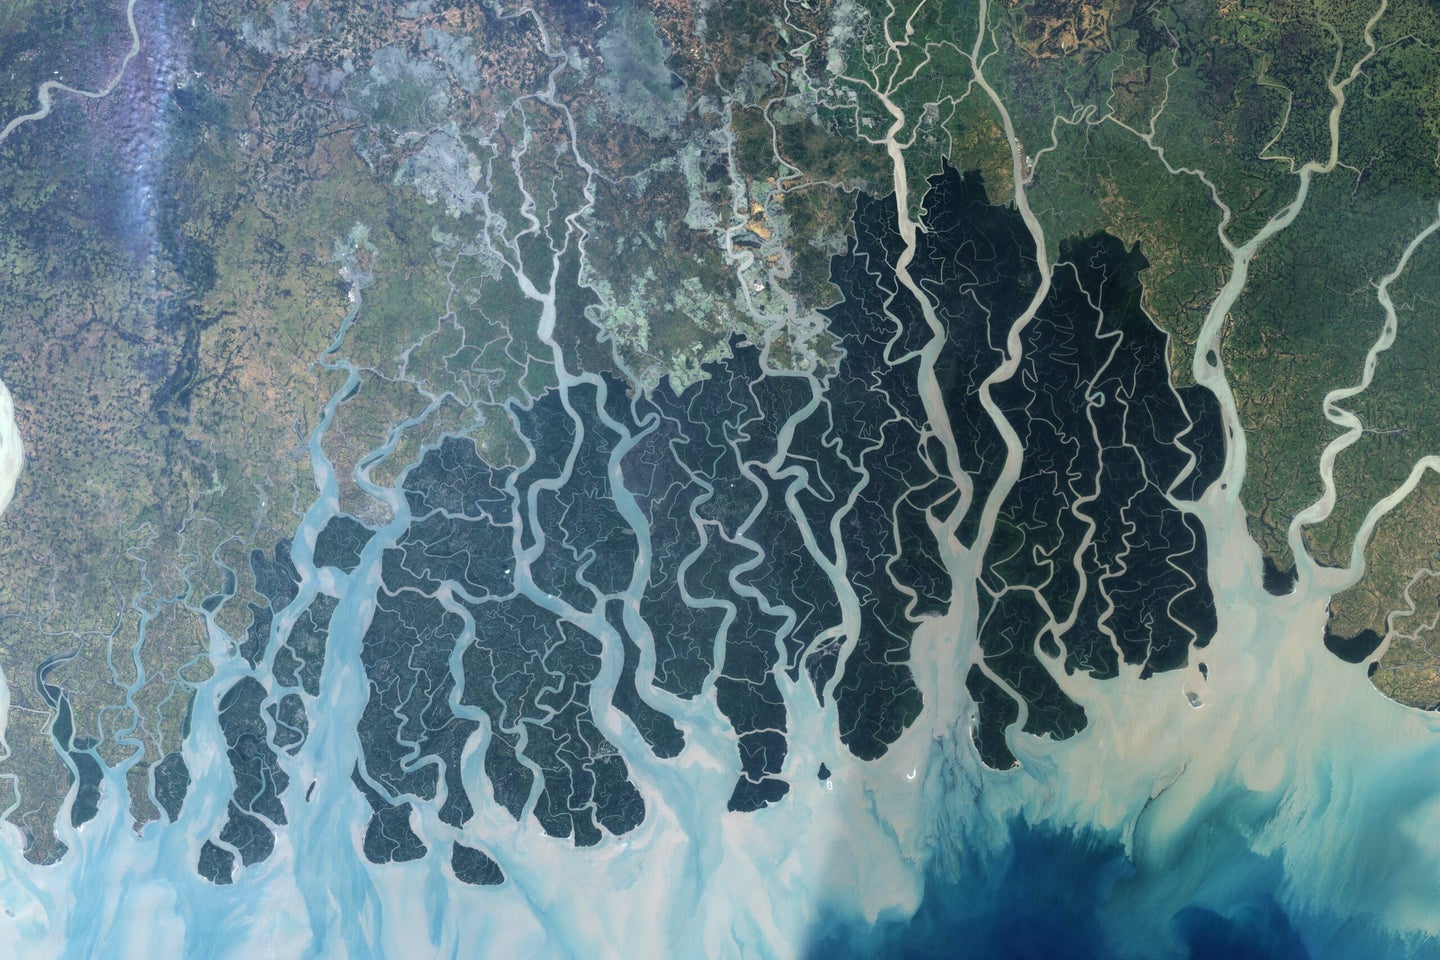 Satellite image of the Sundarban mangrove forest in Bangladesh.